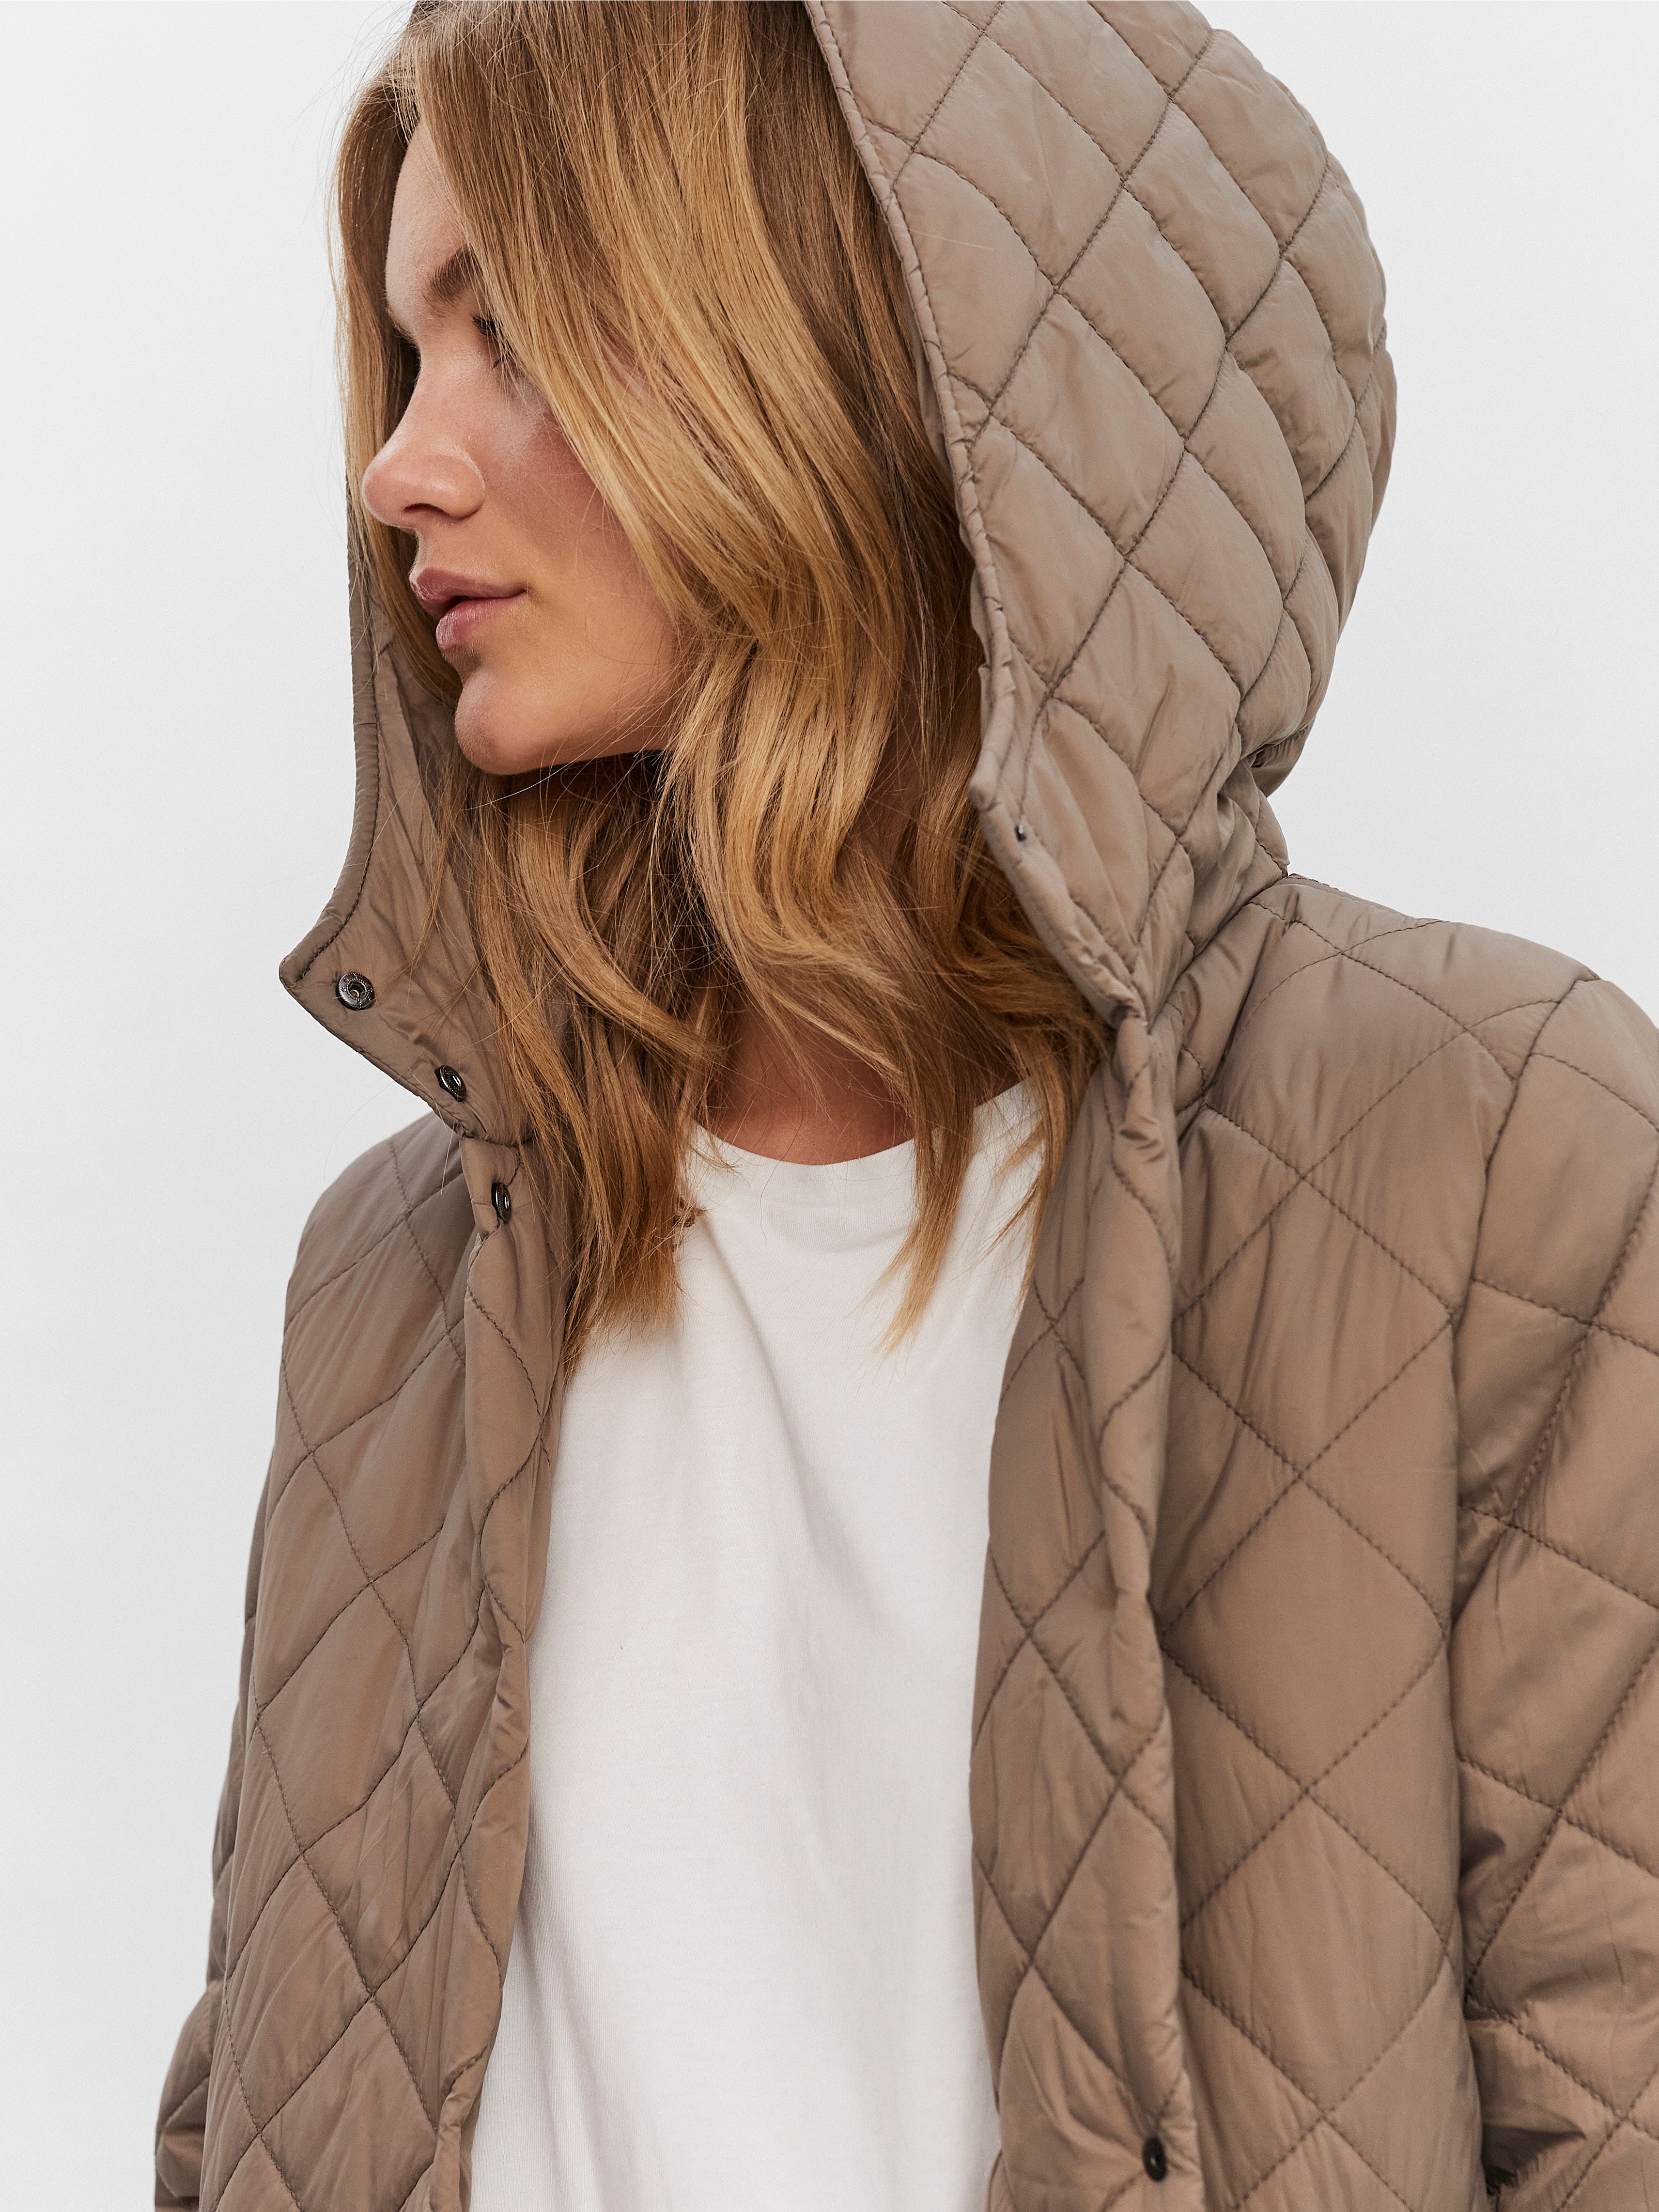 VERO MODA Solid Open Front Jacket | Nordstrom | Fashion clothes women,  Winter coats women, Open front jacket